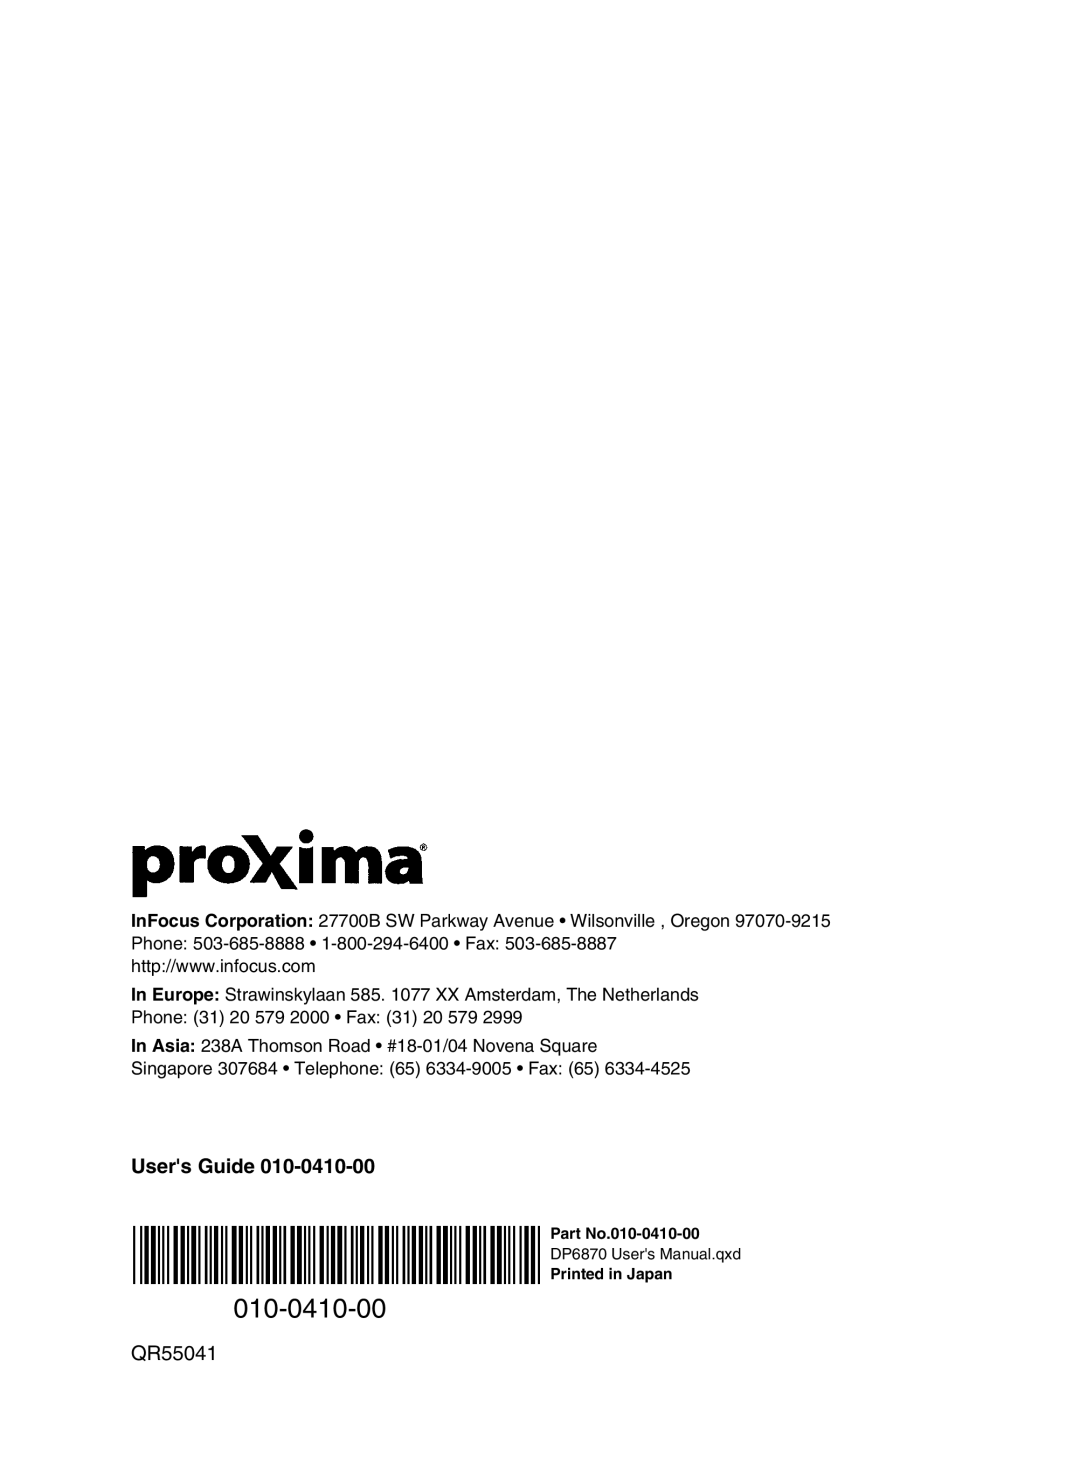 Proxima ASA DP6870 manual 010-0410-00, Users Guide, QR55041 